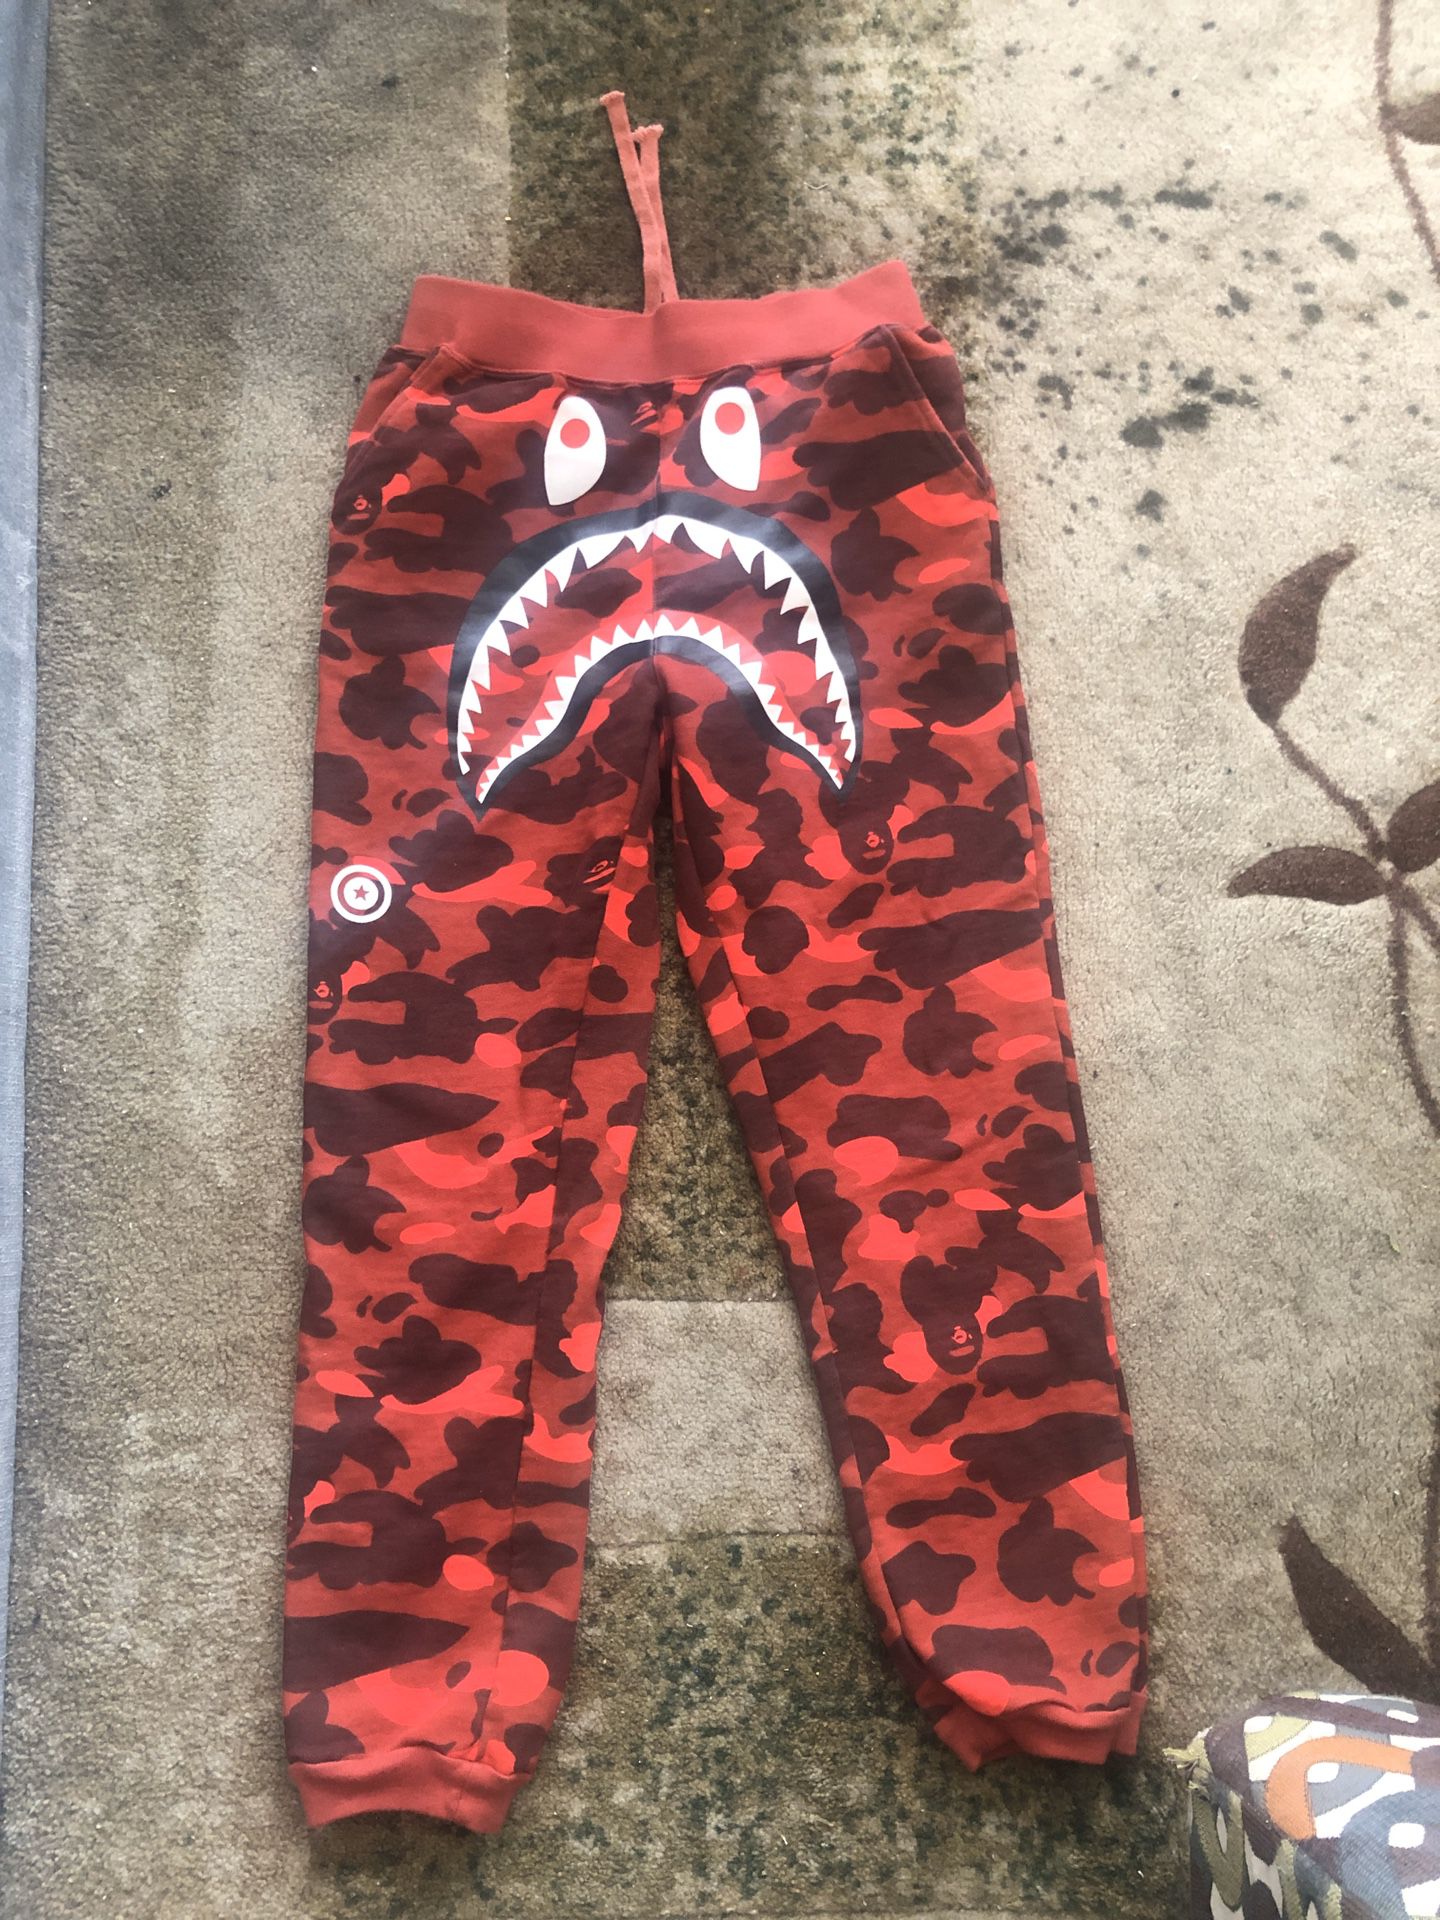 BAPE - red camo joggers pants size M